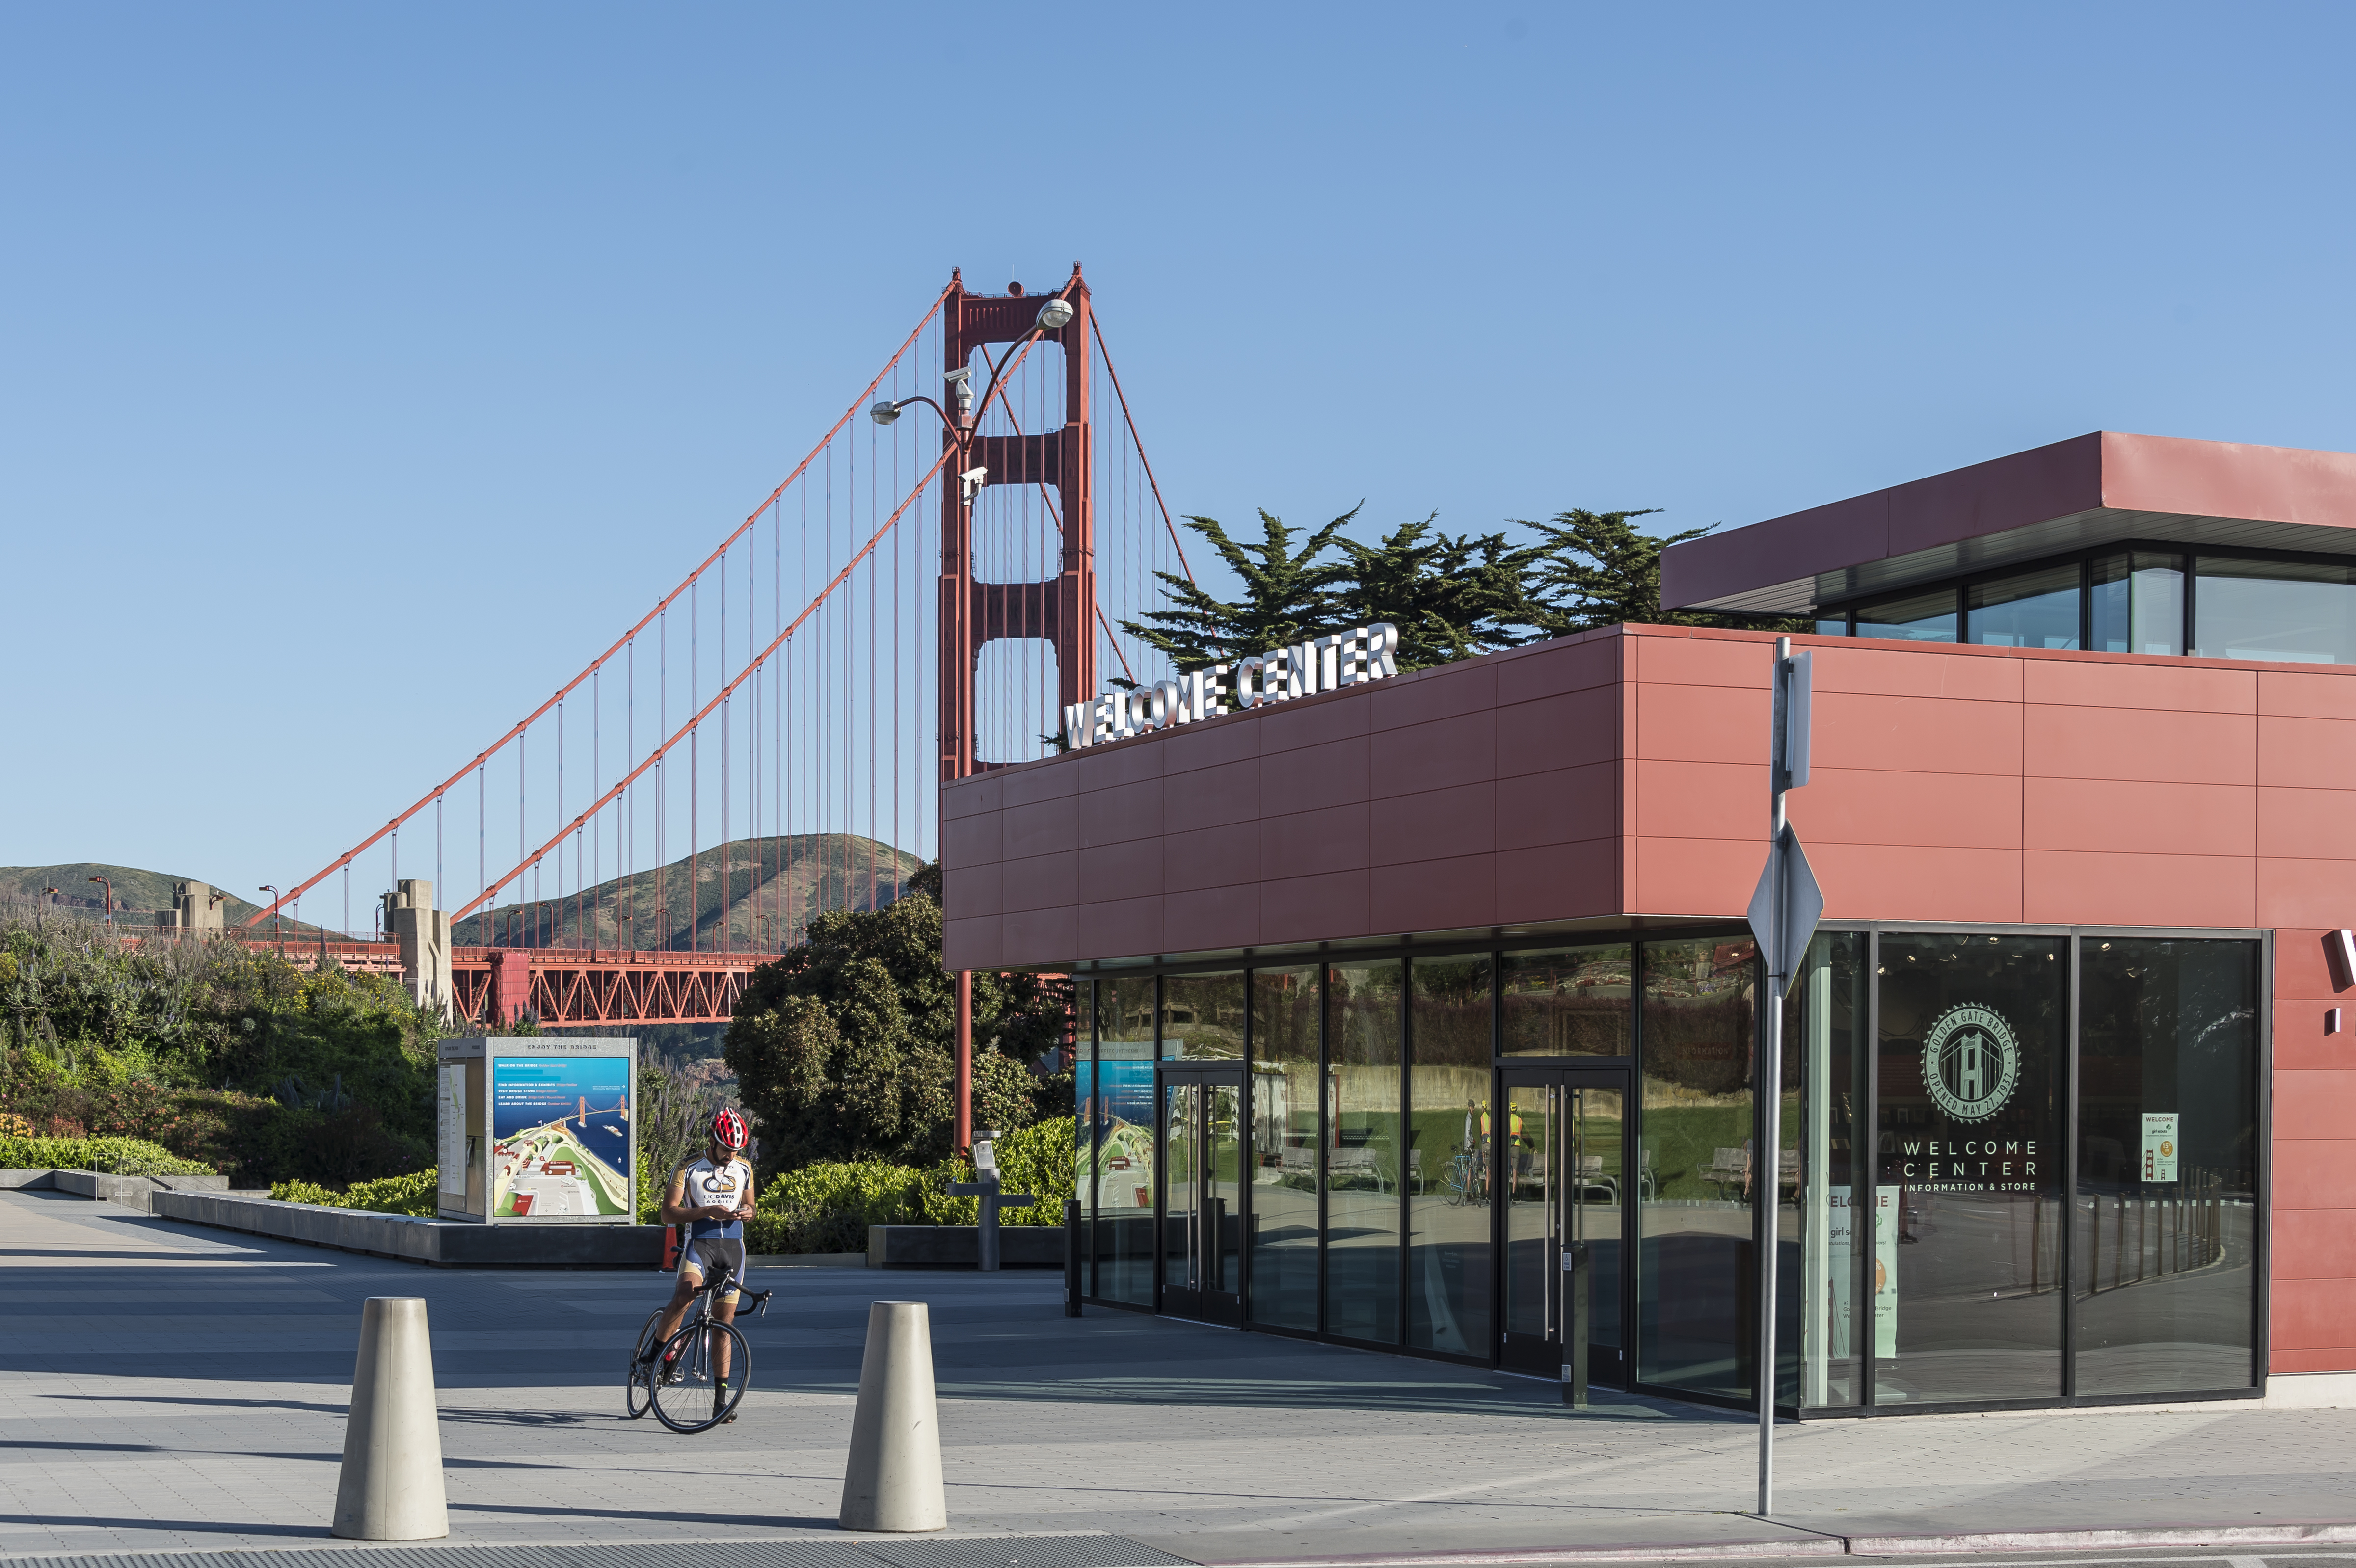 Biker paused outside of the Golden Gate Bridge Welcome Center with the Golden Gate Bridge in the background